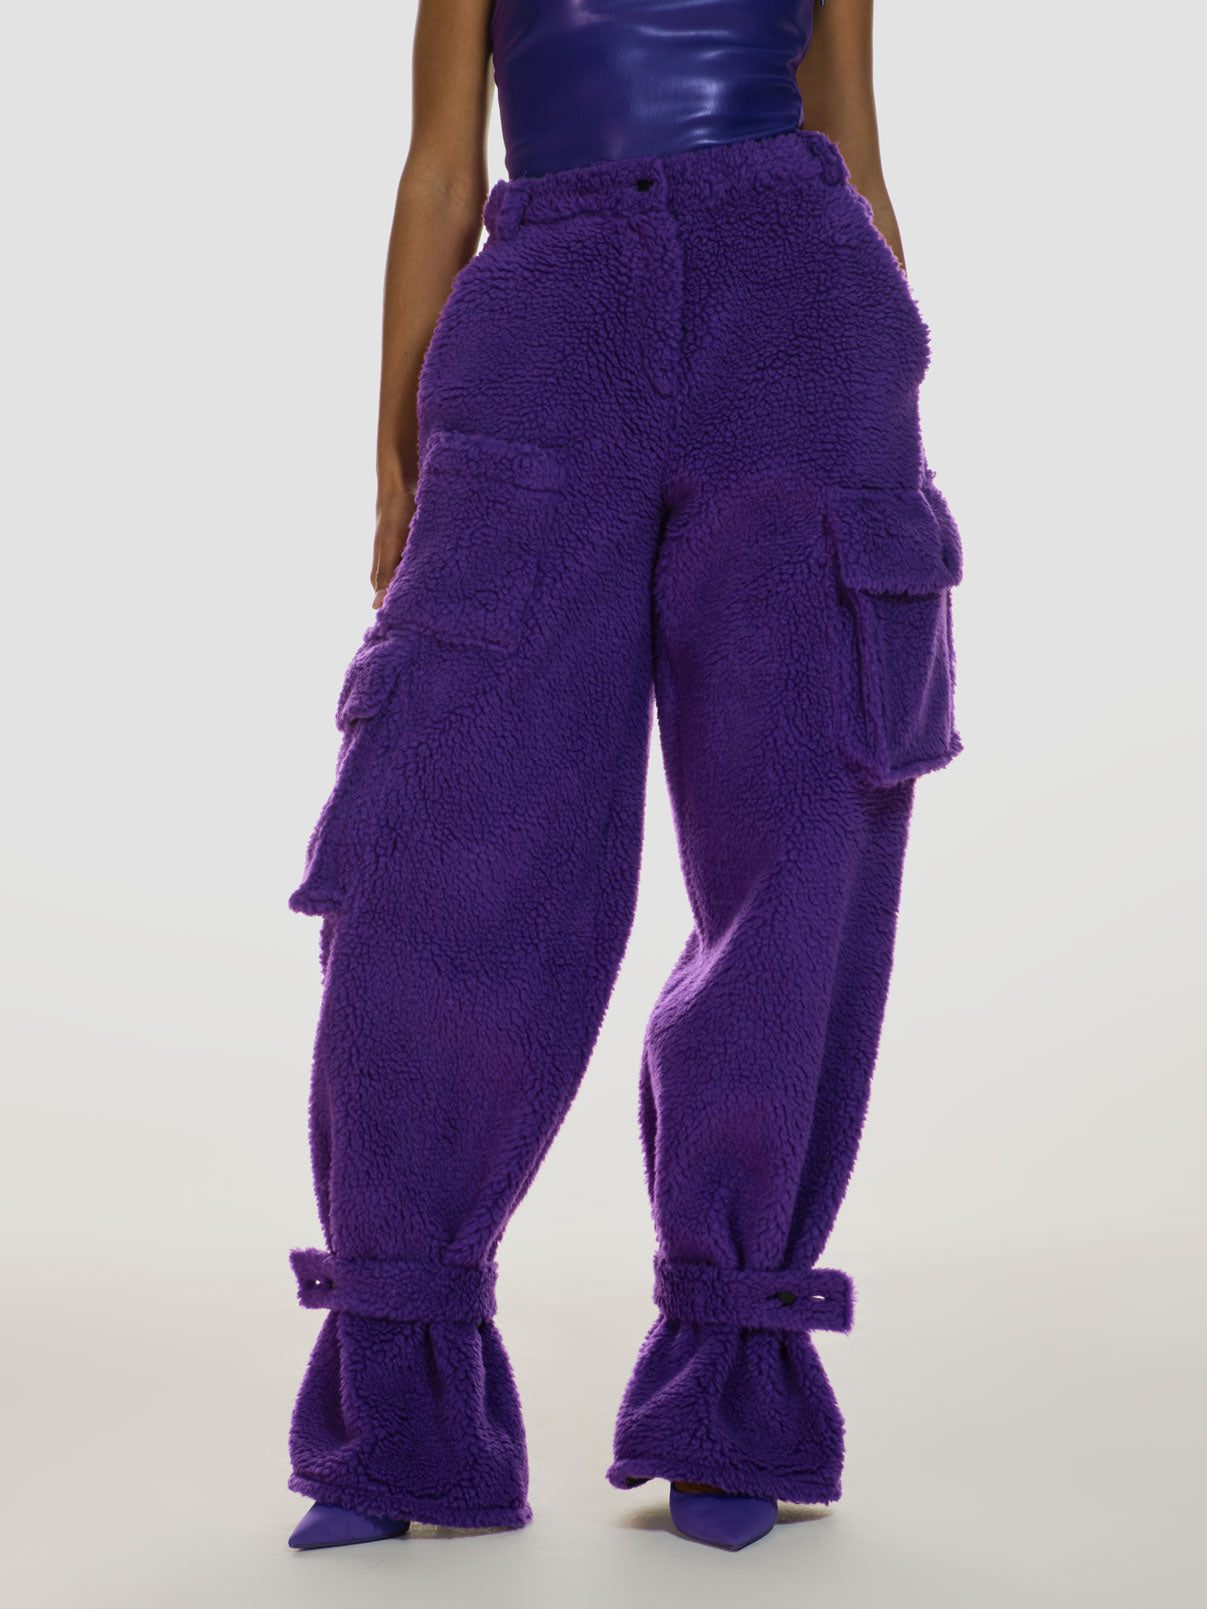 Medium full shot of a girl wearing a purple vegan leather tube top and purple polar fleece cargo pants